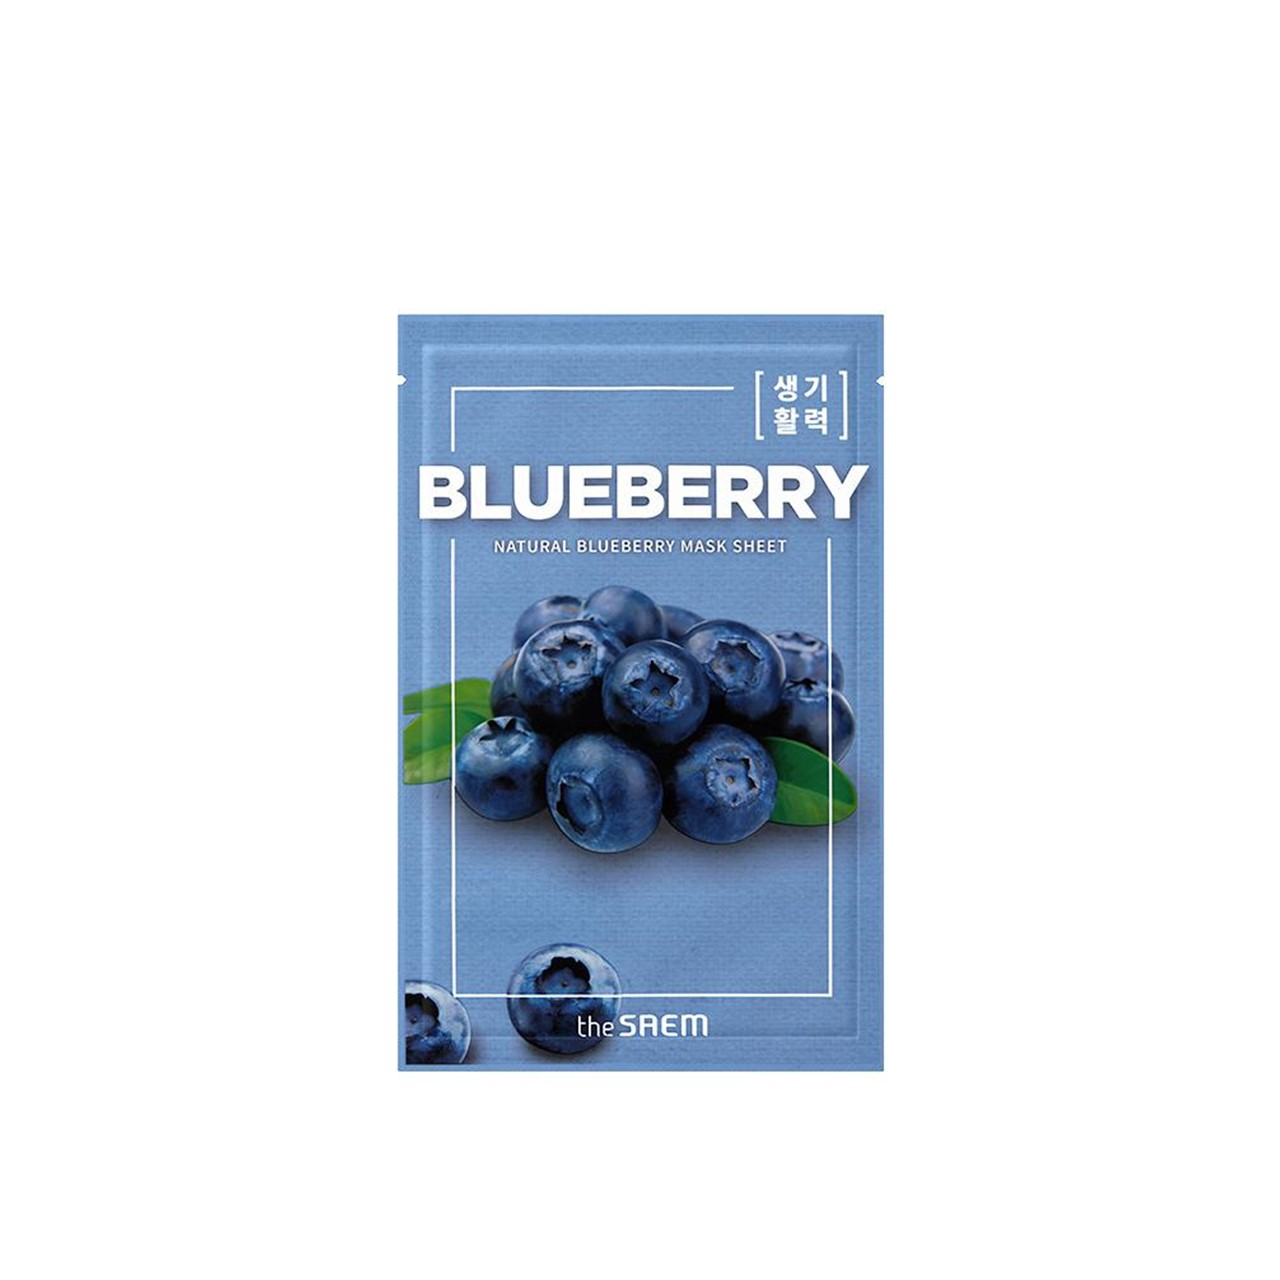 The Saem Natural Blueberry Mask Sheet 21ml (0.71fl oz)